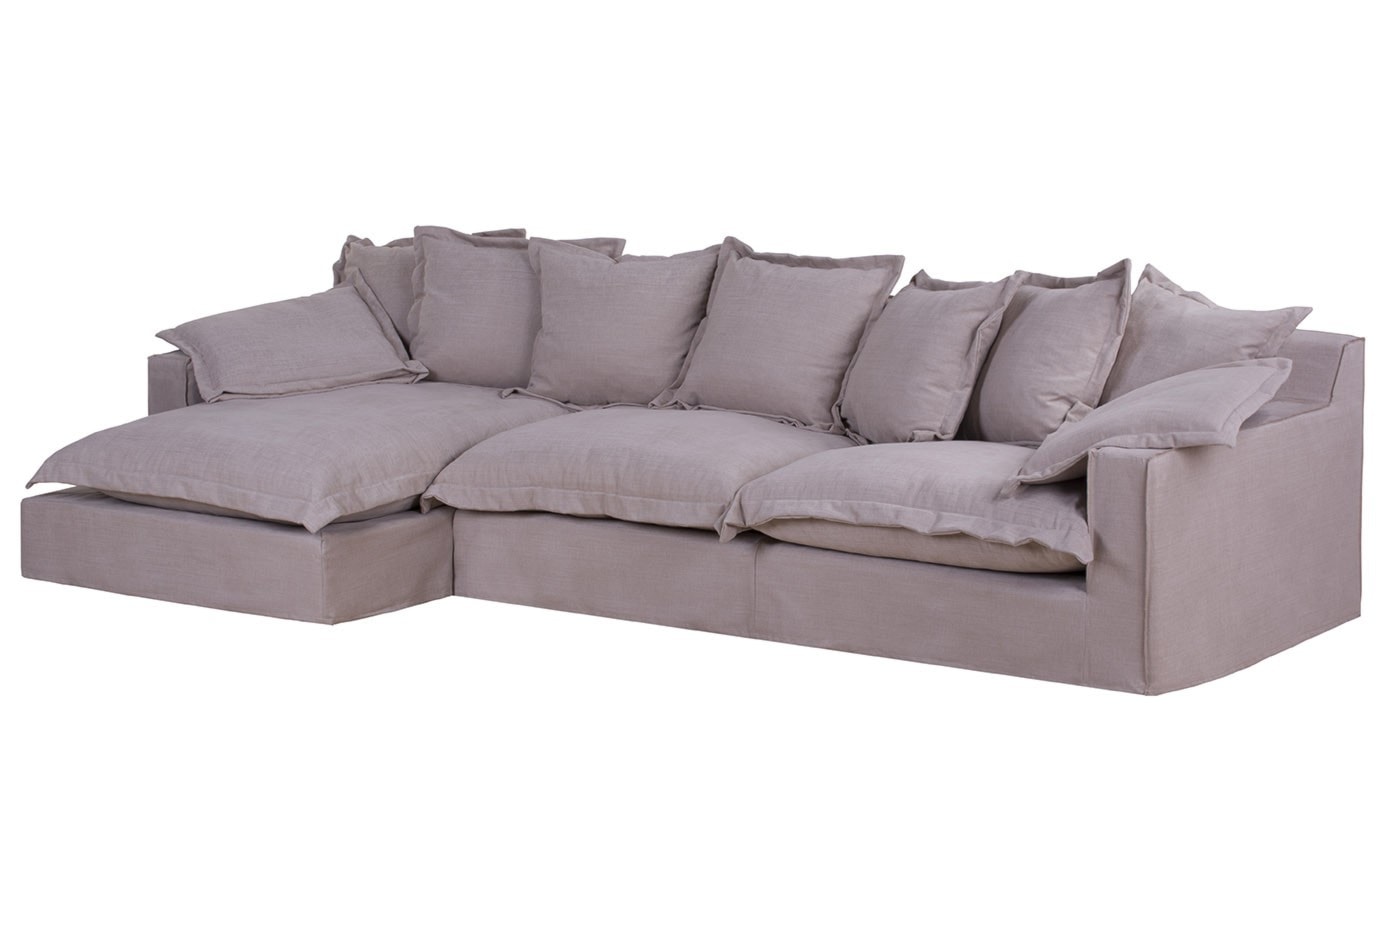 Komfortowa sofa narożna z szezlongiem Desperado Primavera Furniture - zdjęcie od Primavera Furniture - Homebook